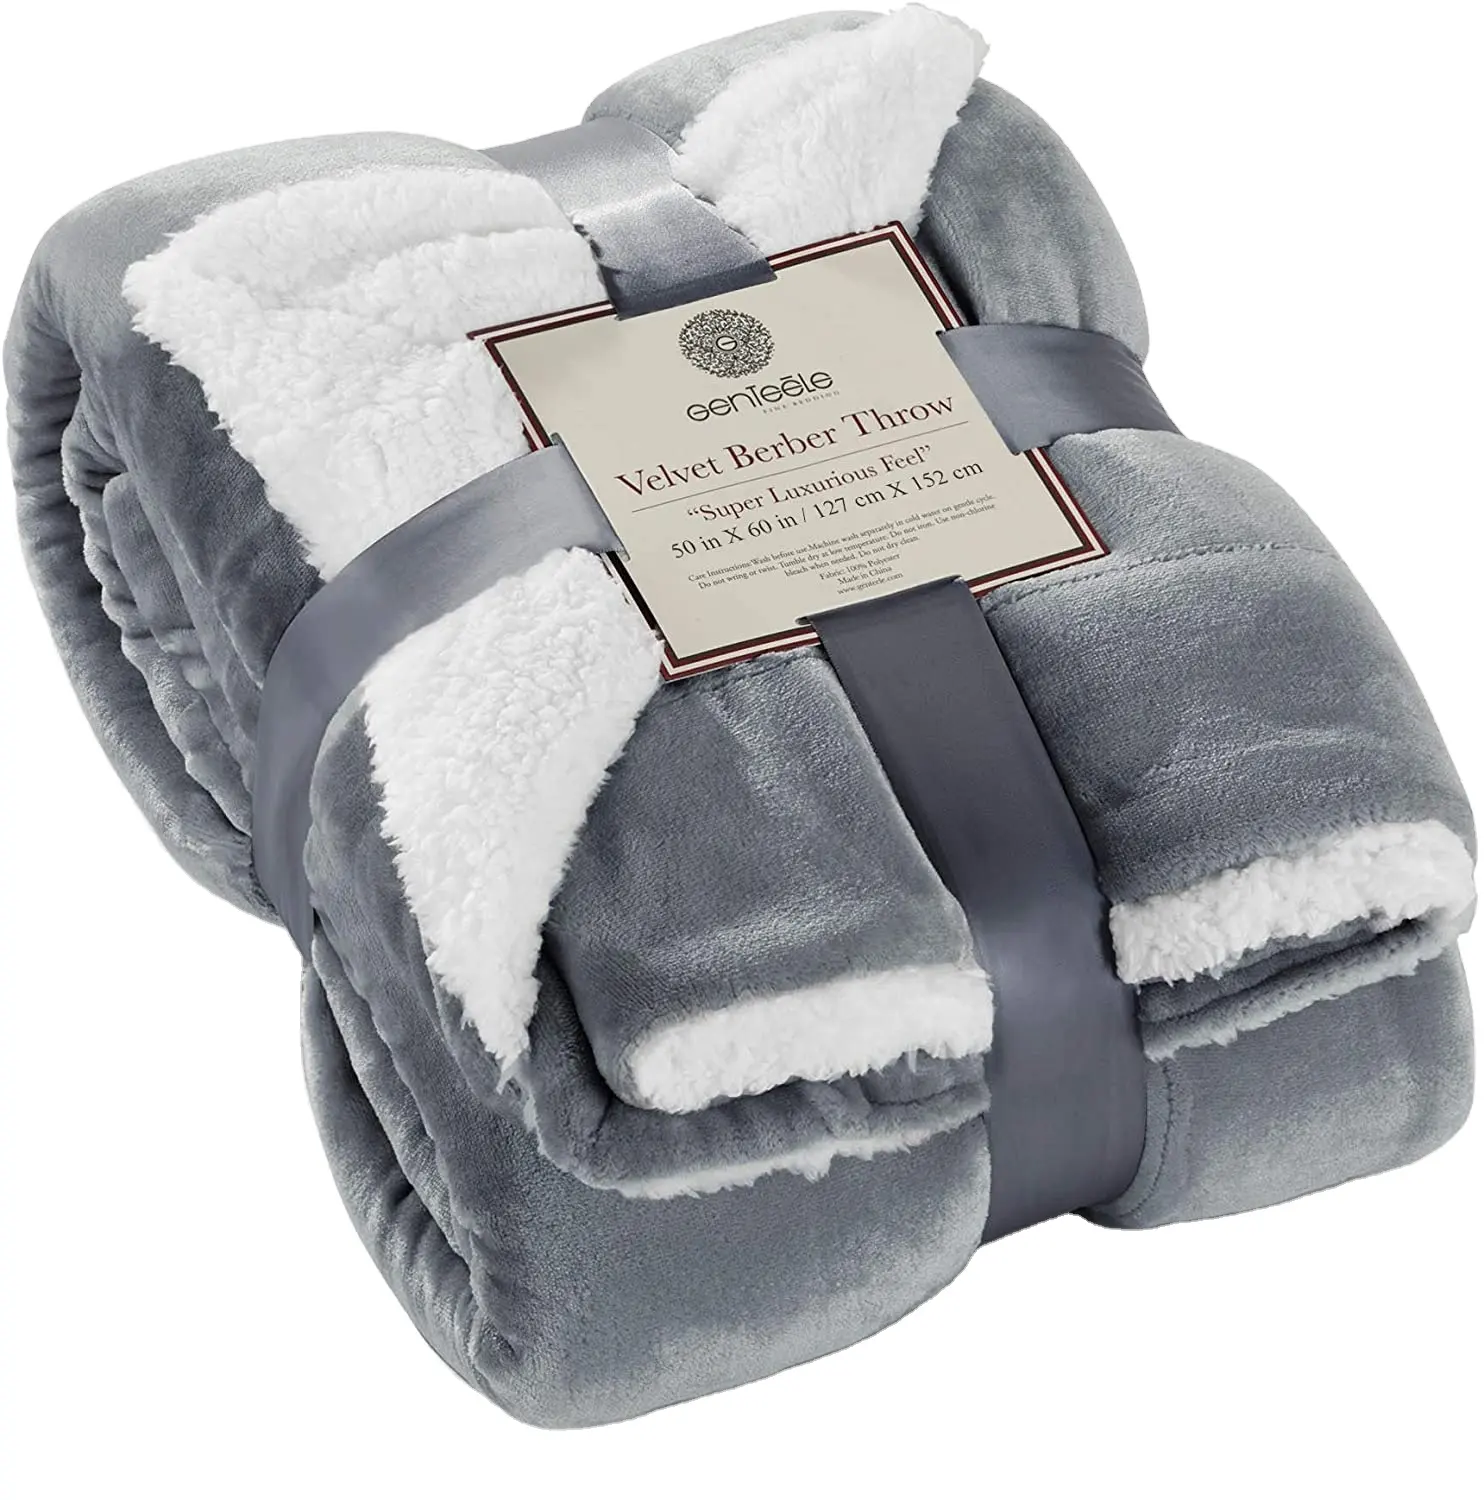 Sherpa Throw Blanket Super Soft reversibile Ultra lussuoso coperta di peluche (50 pollici x 60 pollici, grigio/bianco)